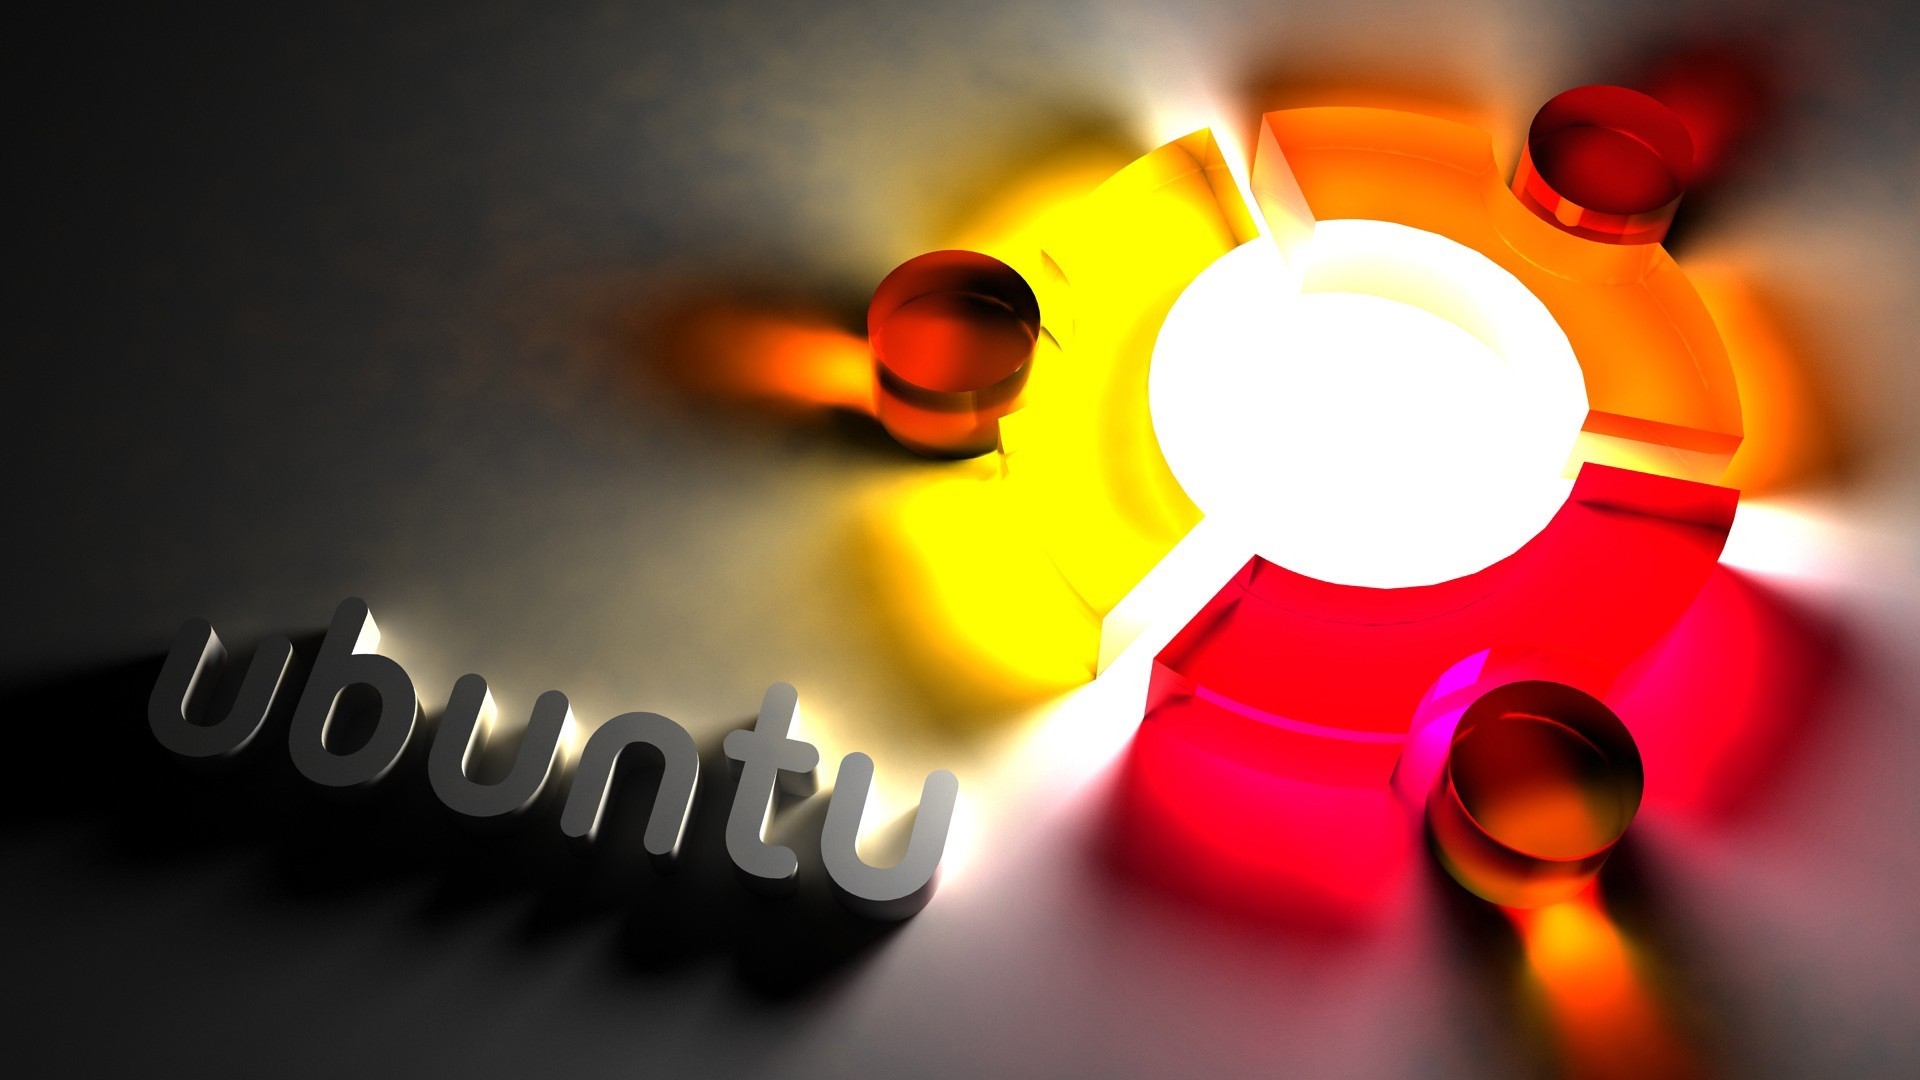 Ubuntu Cool Logo for 1920 x 1080 HDTV 1080p resolution